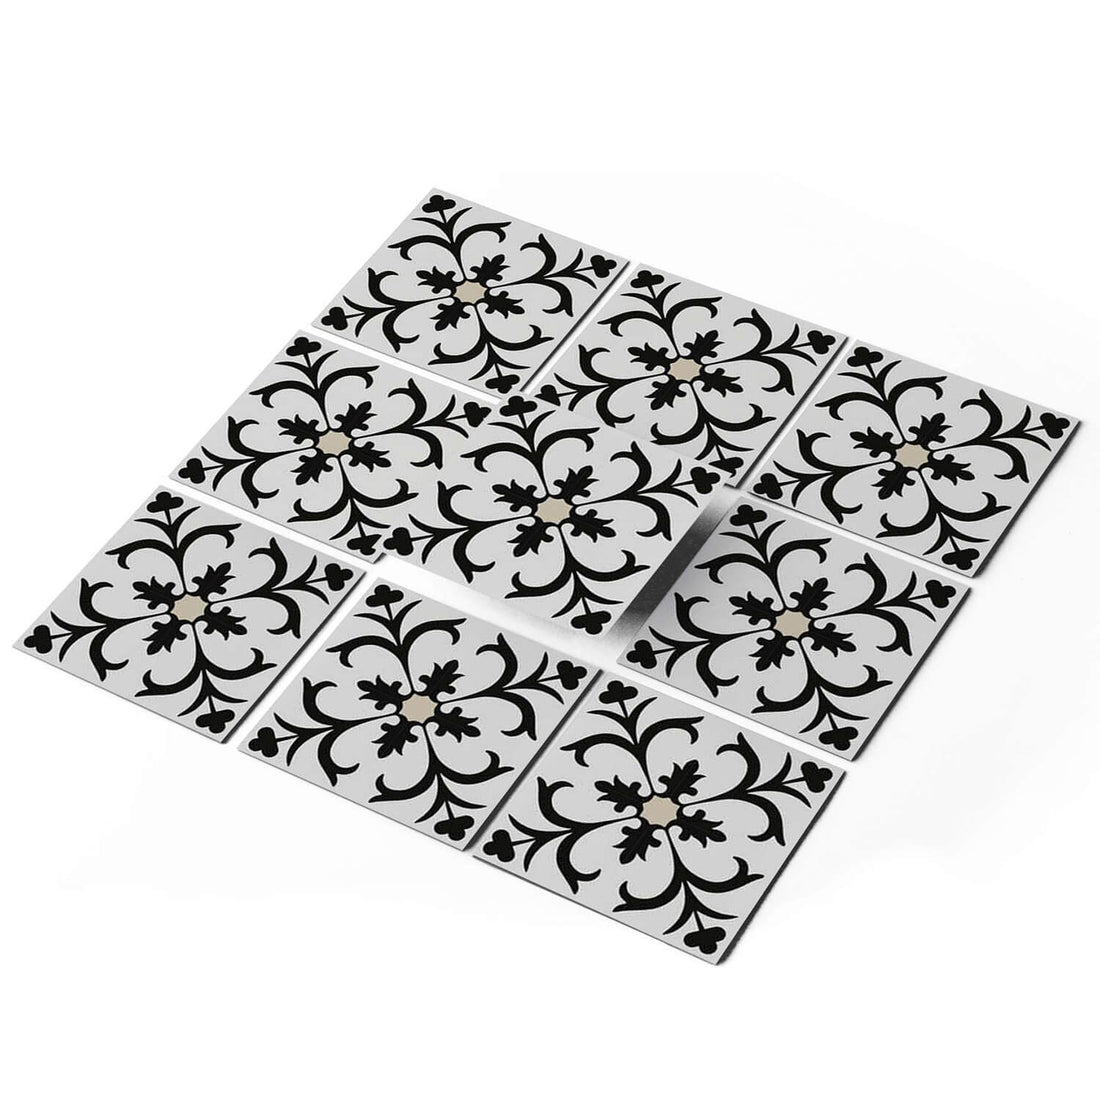 Fliesenfolie - Black Flower Pattern - Do-it-yourself - creatisto pds1